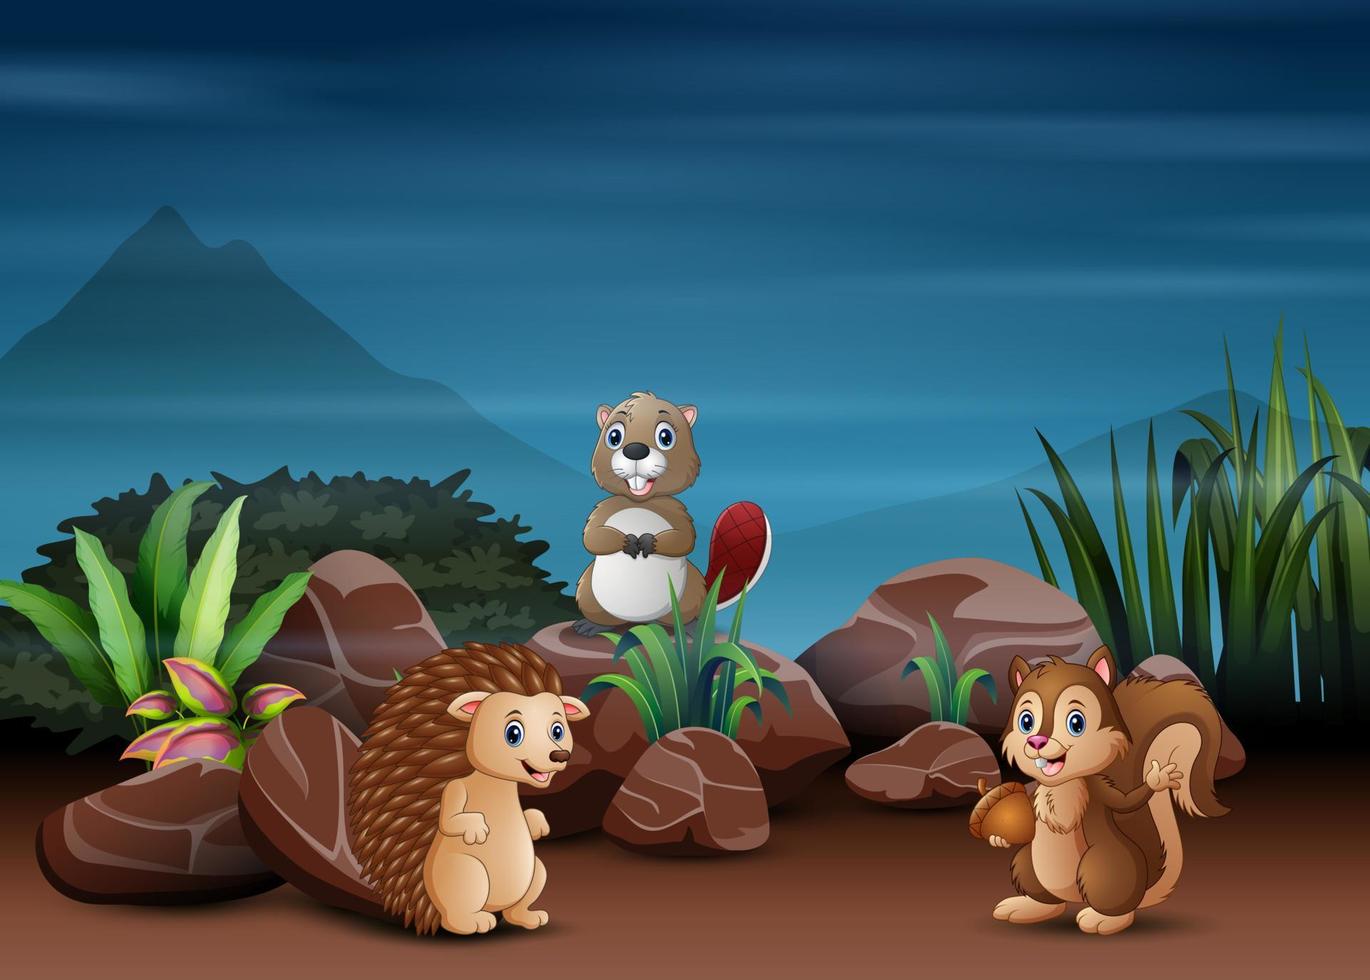 Animals cartoon playing in the night scene vector